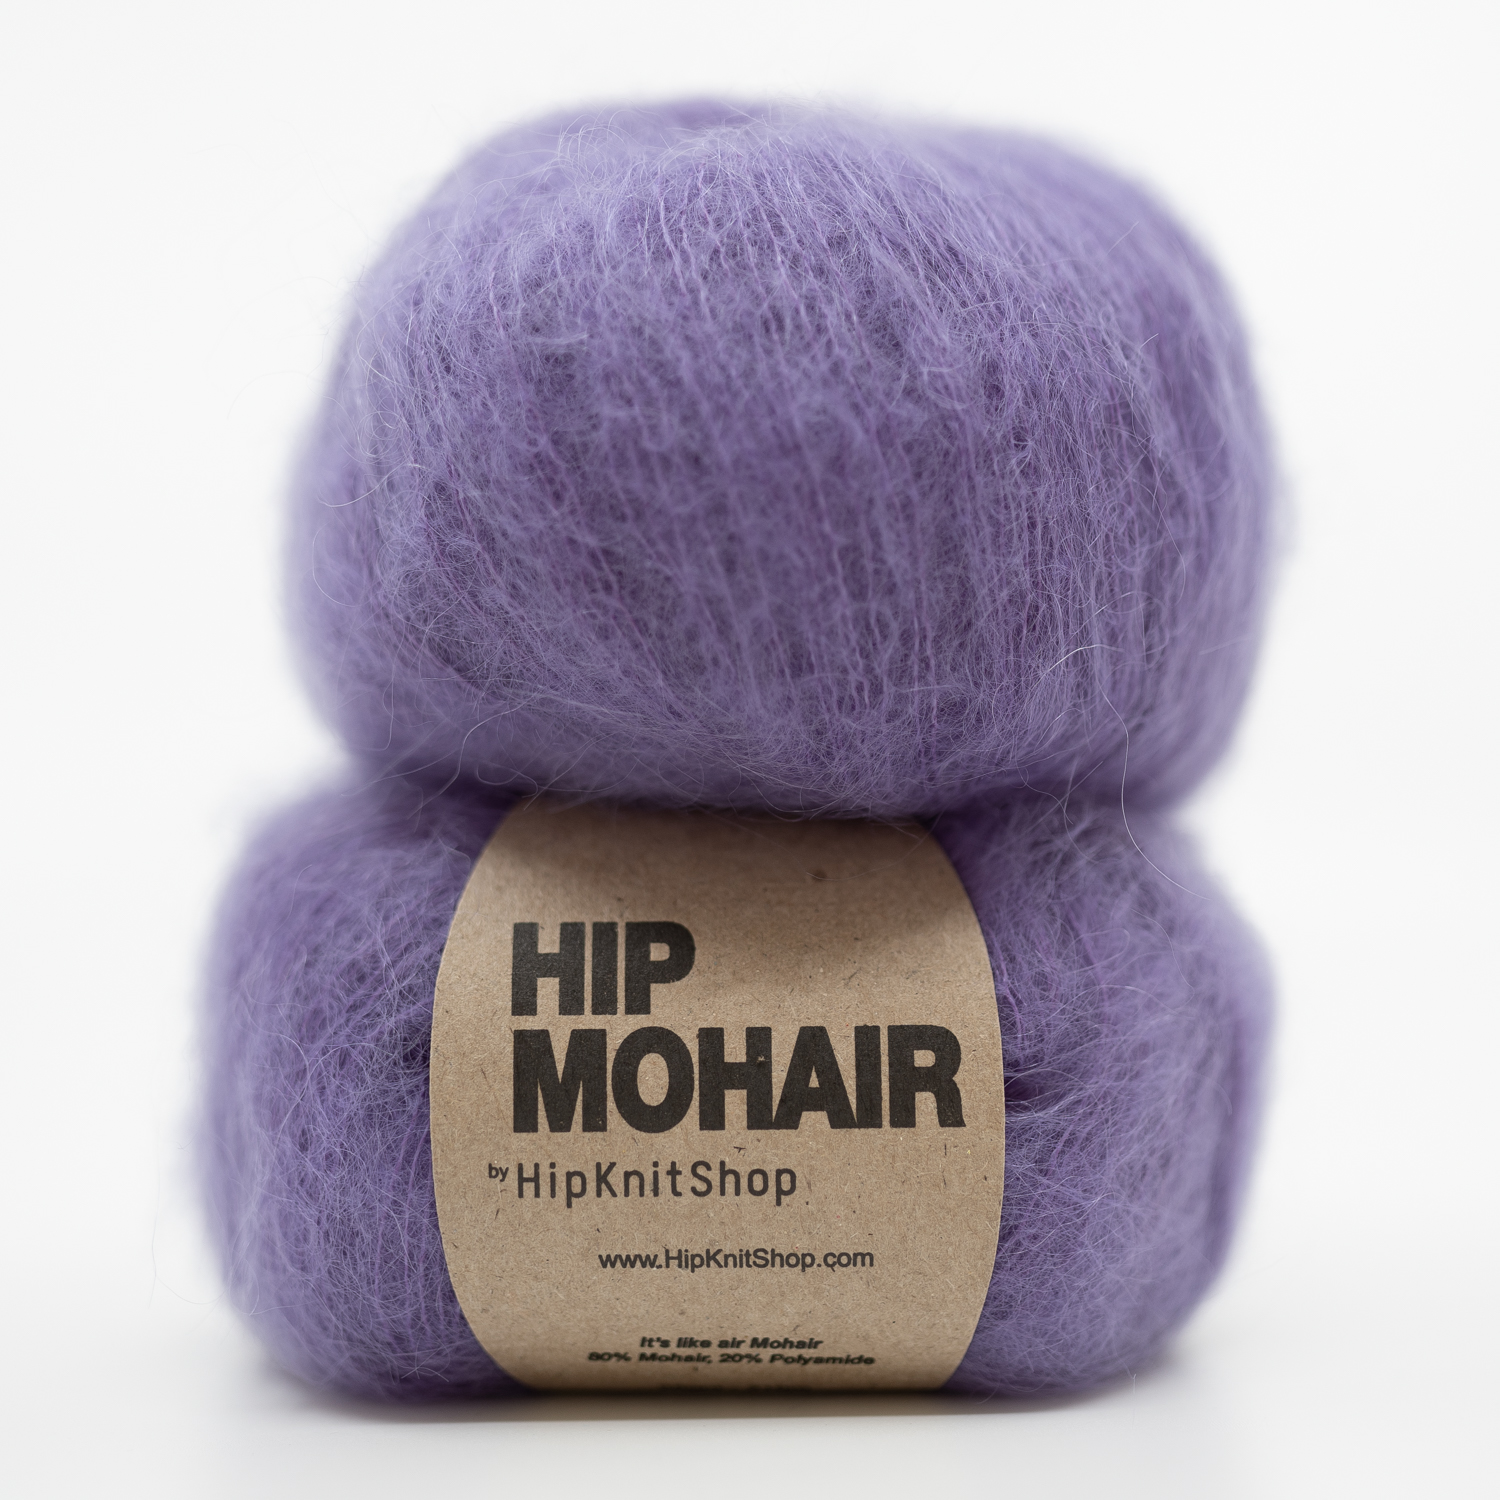 Hip mohair - grape smoothie